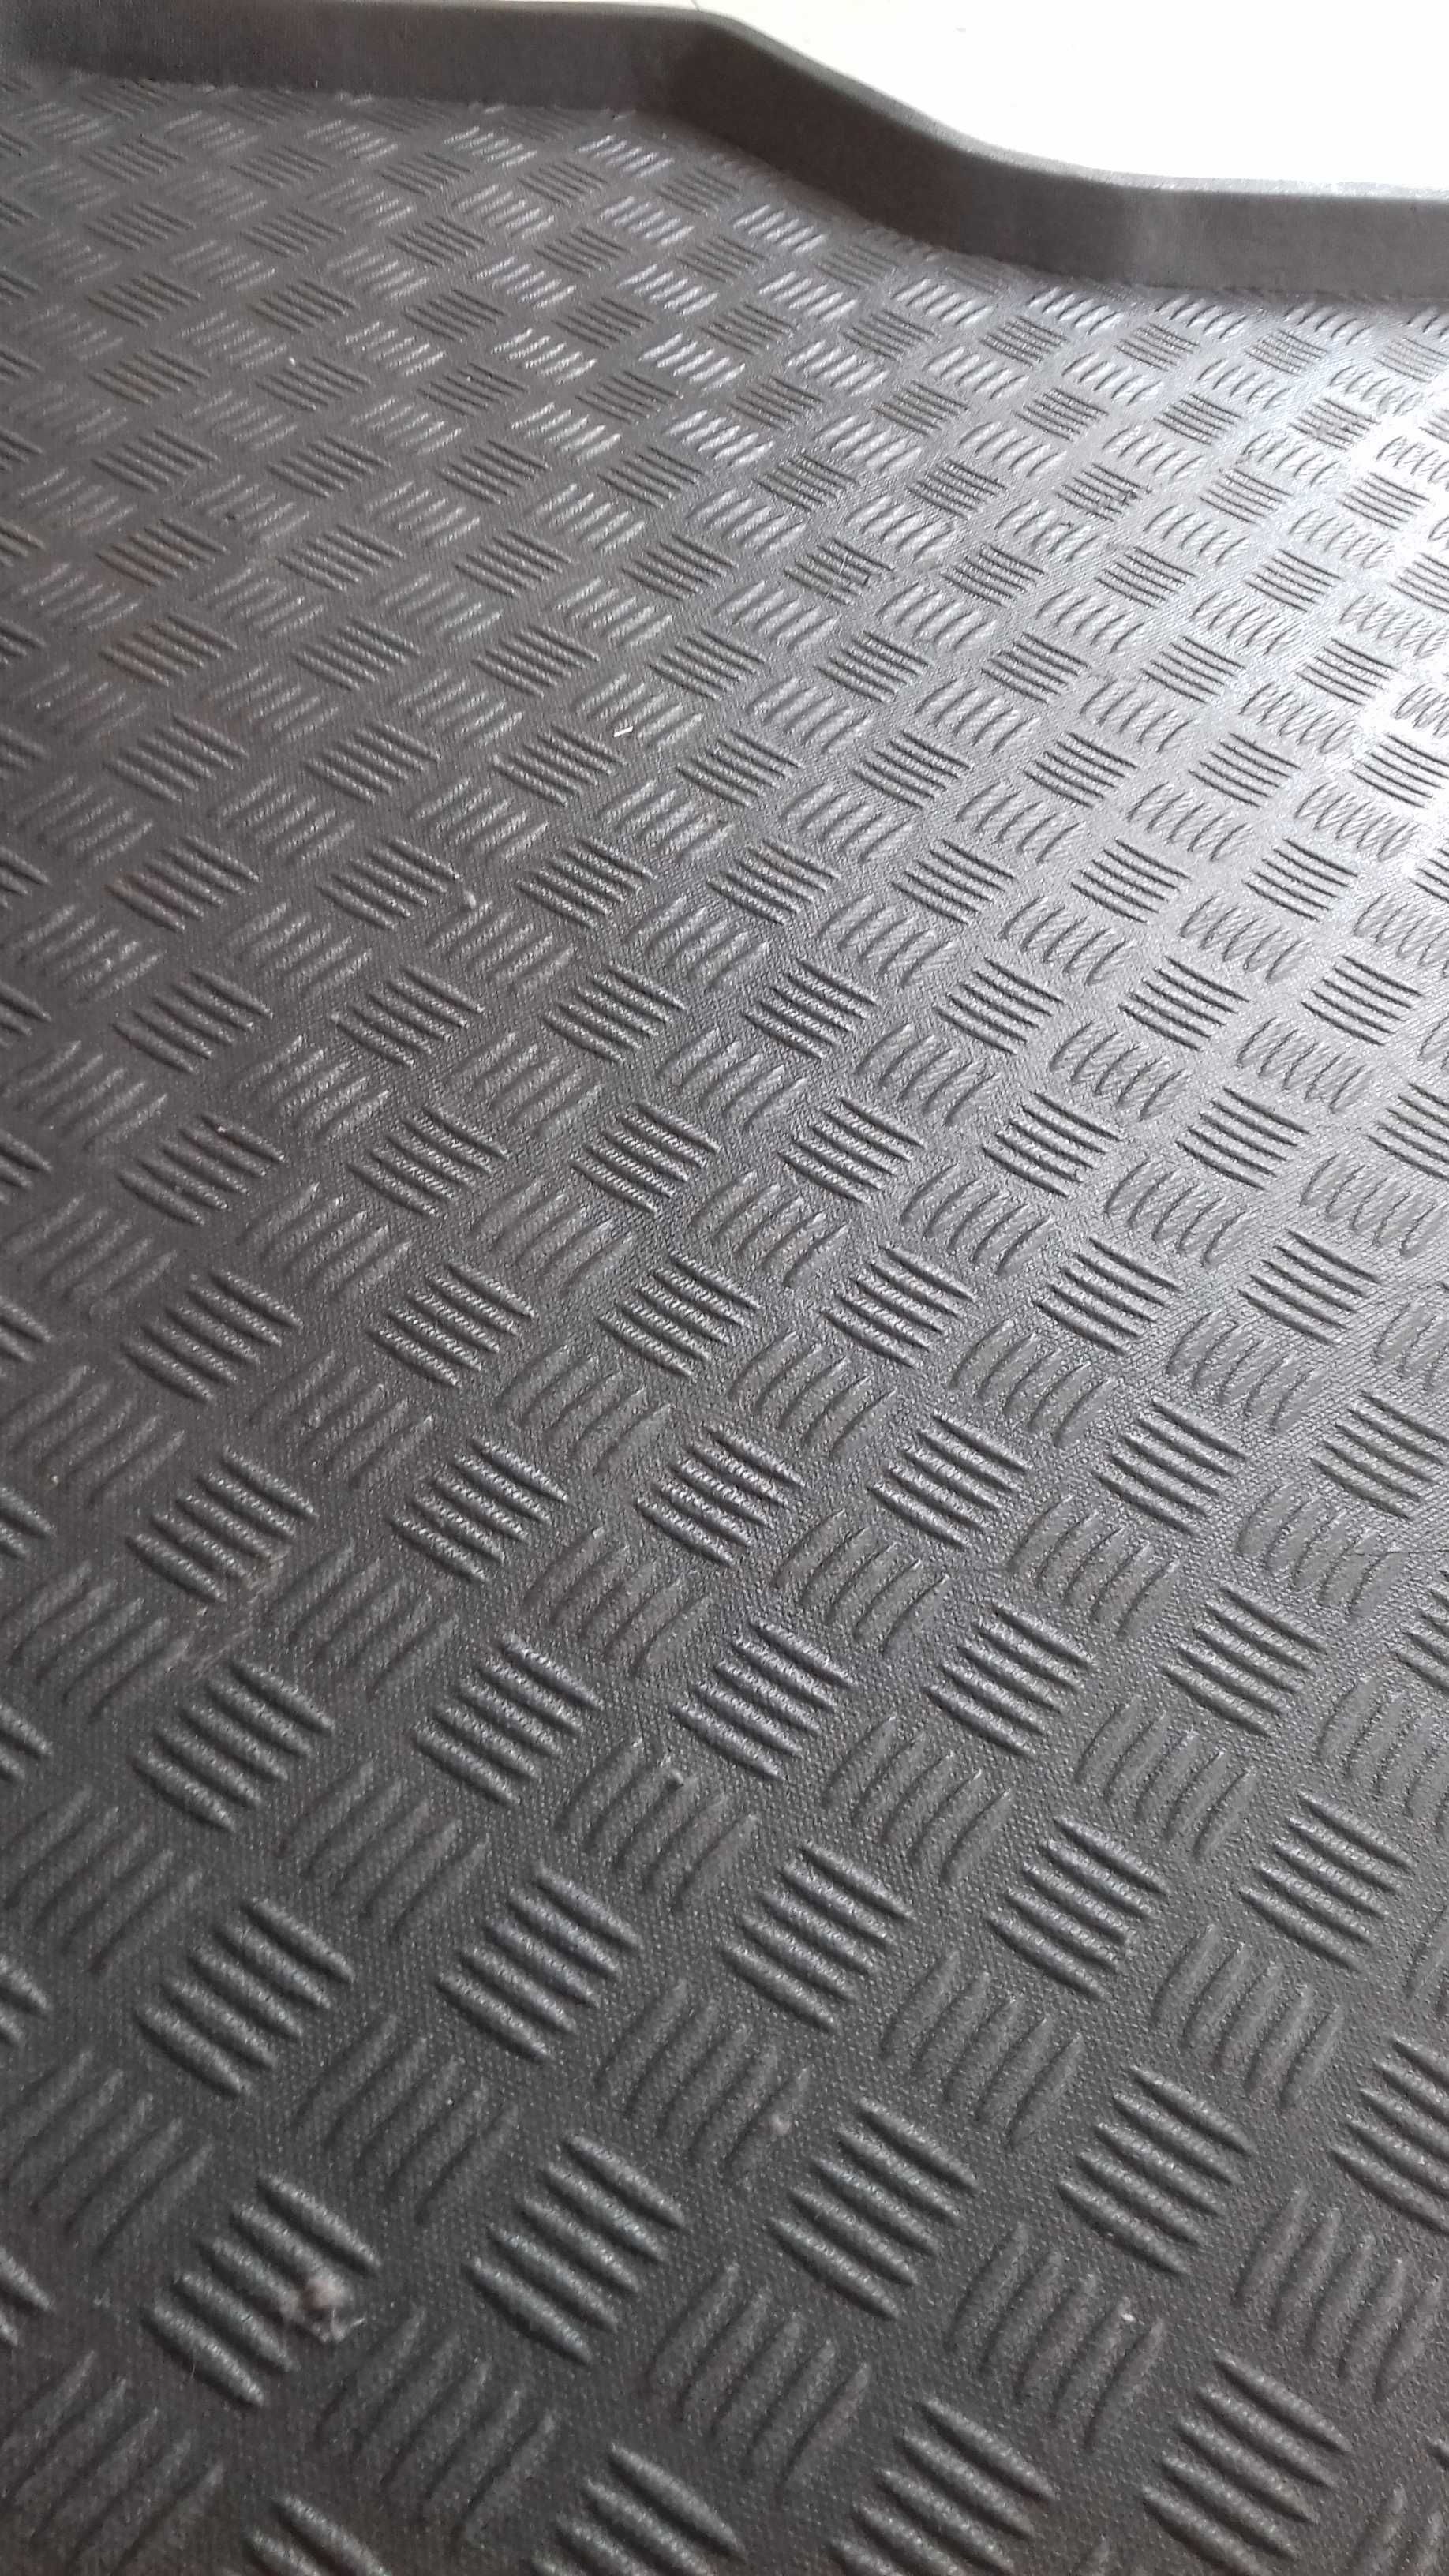 Mata wkład dywanik do bagażnika samochodu Honda Accord VII kombi